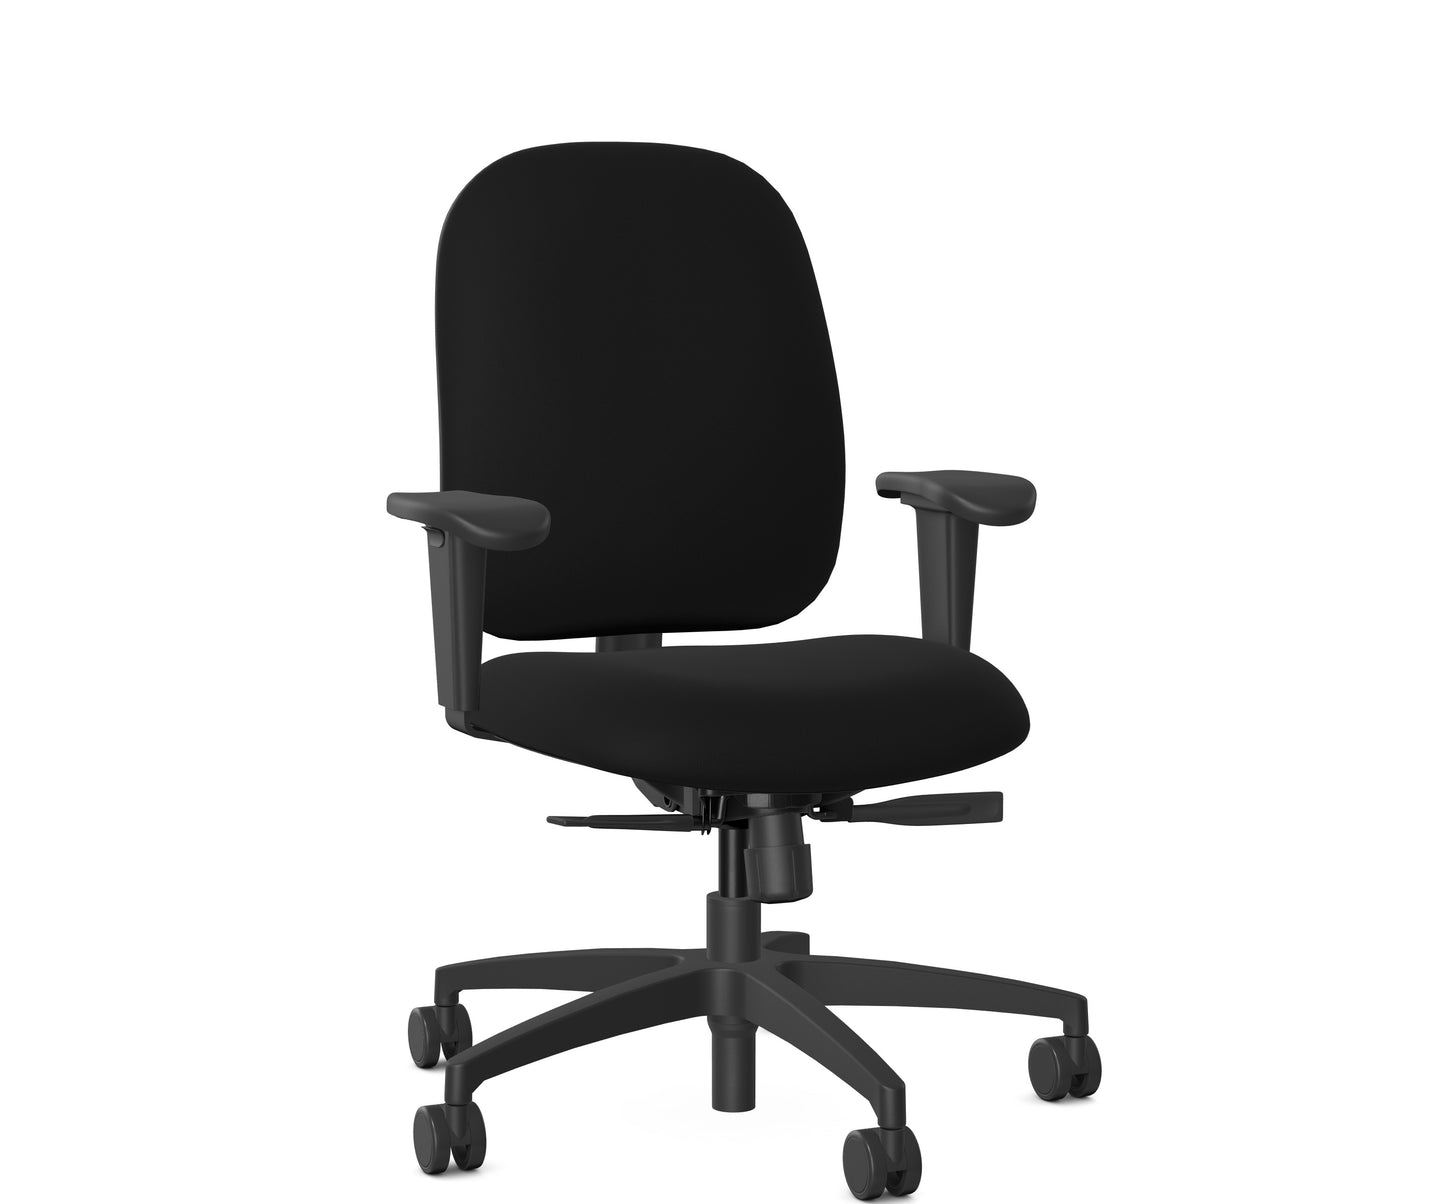 Presto Mid-Back Office Chair